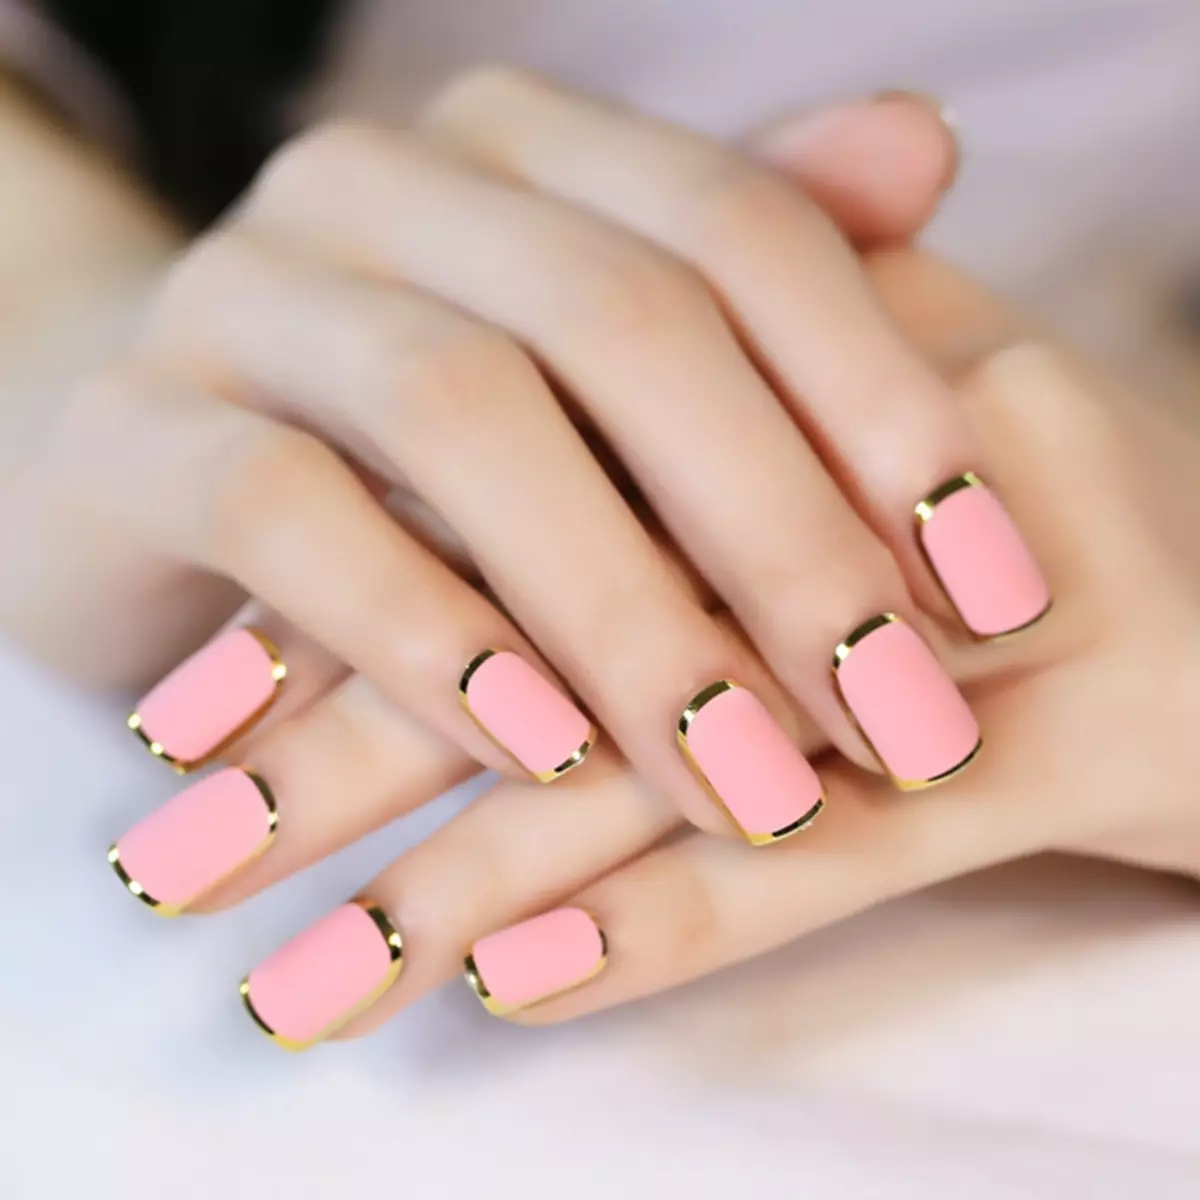 Ногти маникюр фото квадрат. Розовые ногти. Р̸о̸з̸о̸в̸ы̸й̸ м̸а̸н̸и̸к̸. Квадратные ногти. Красивый розовый маникюр.